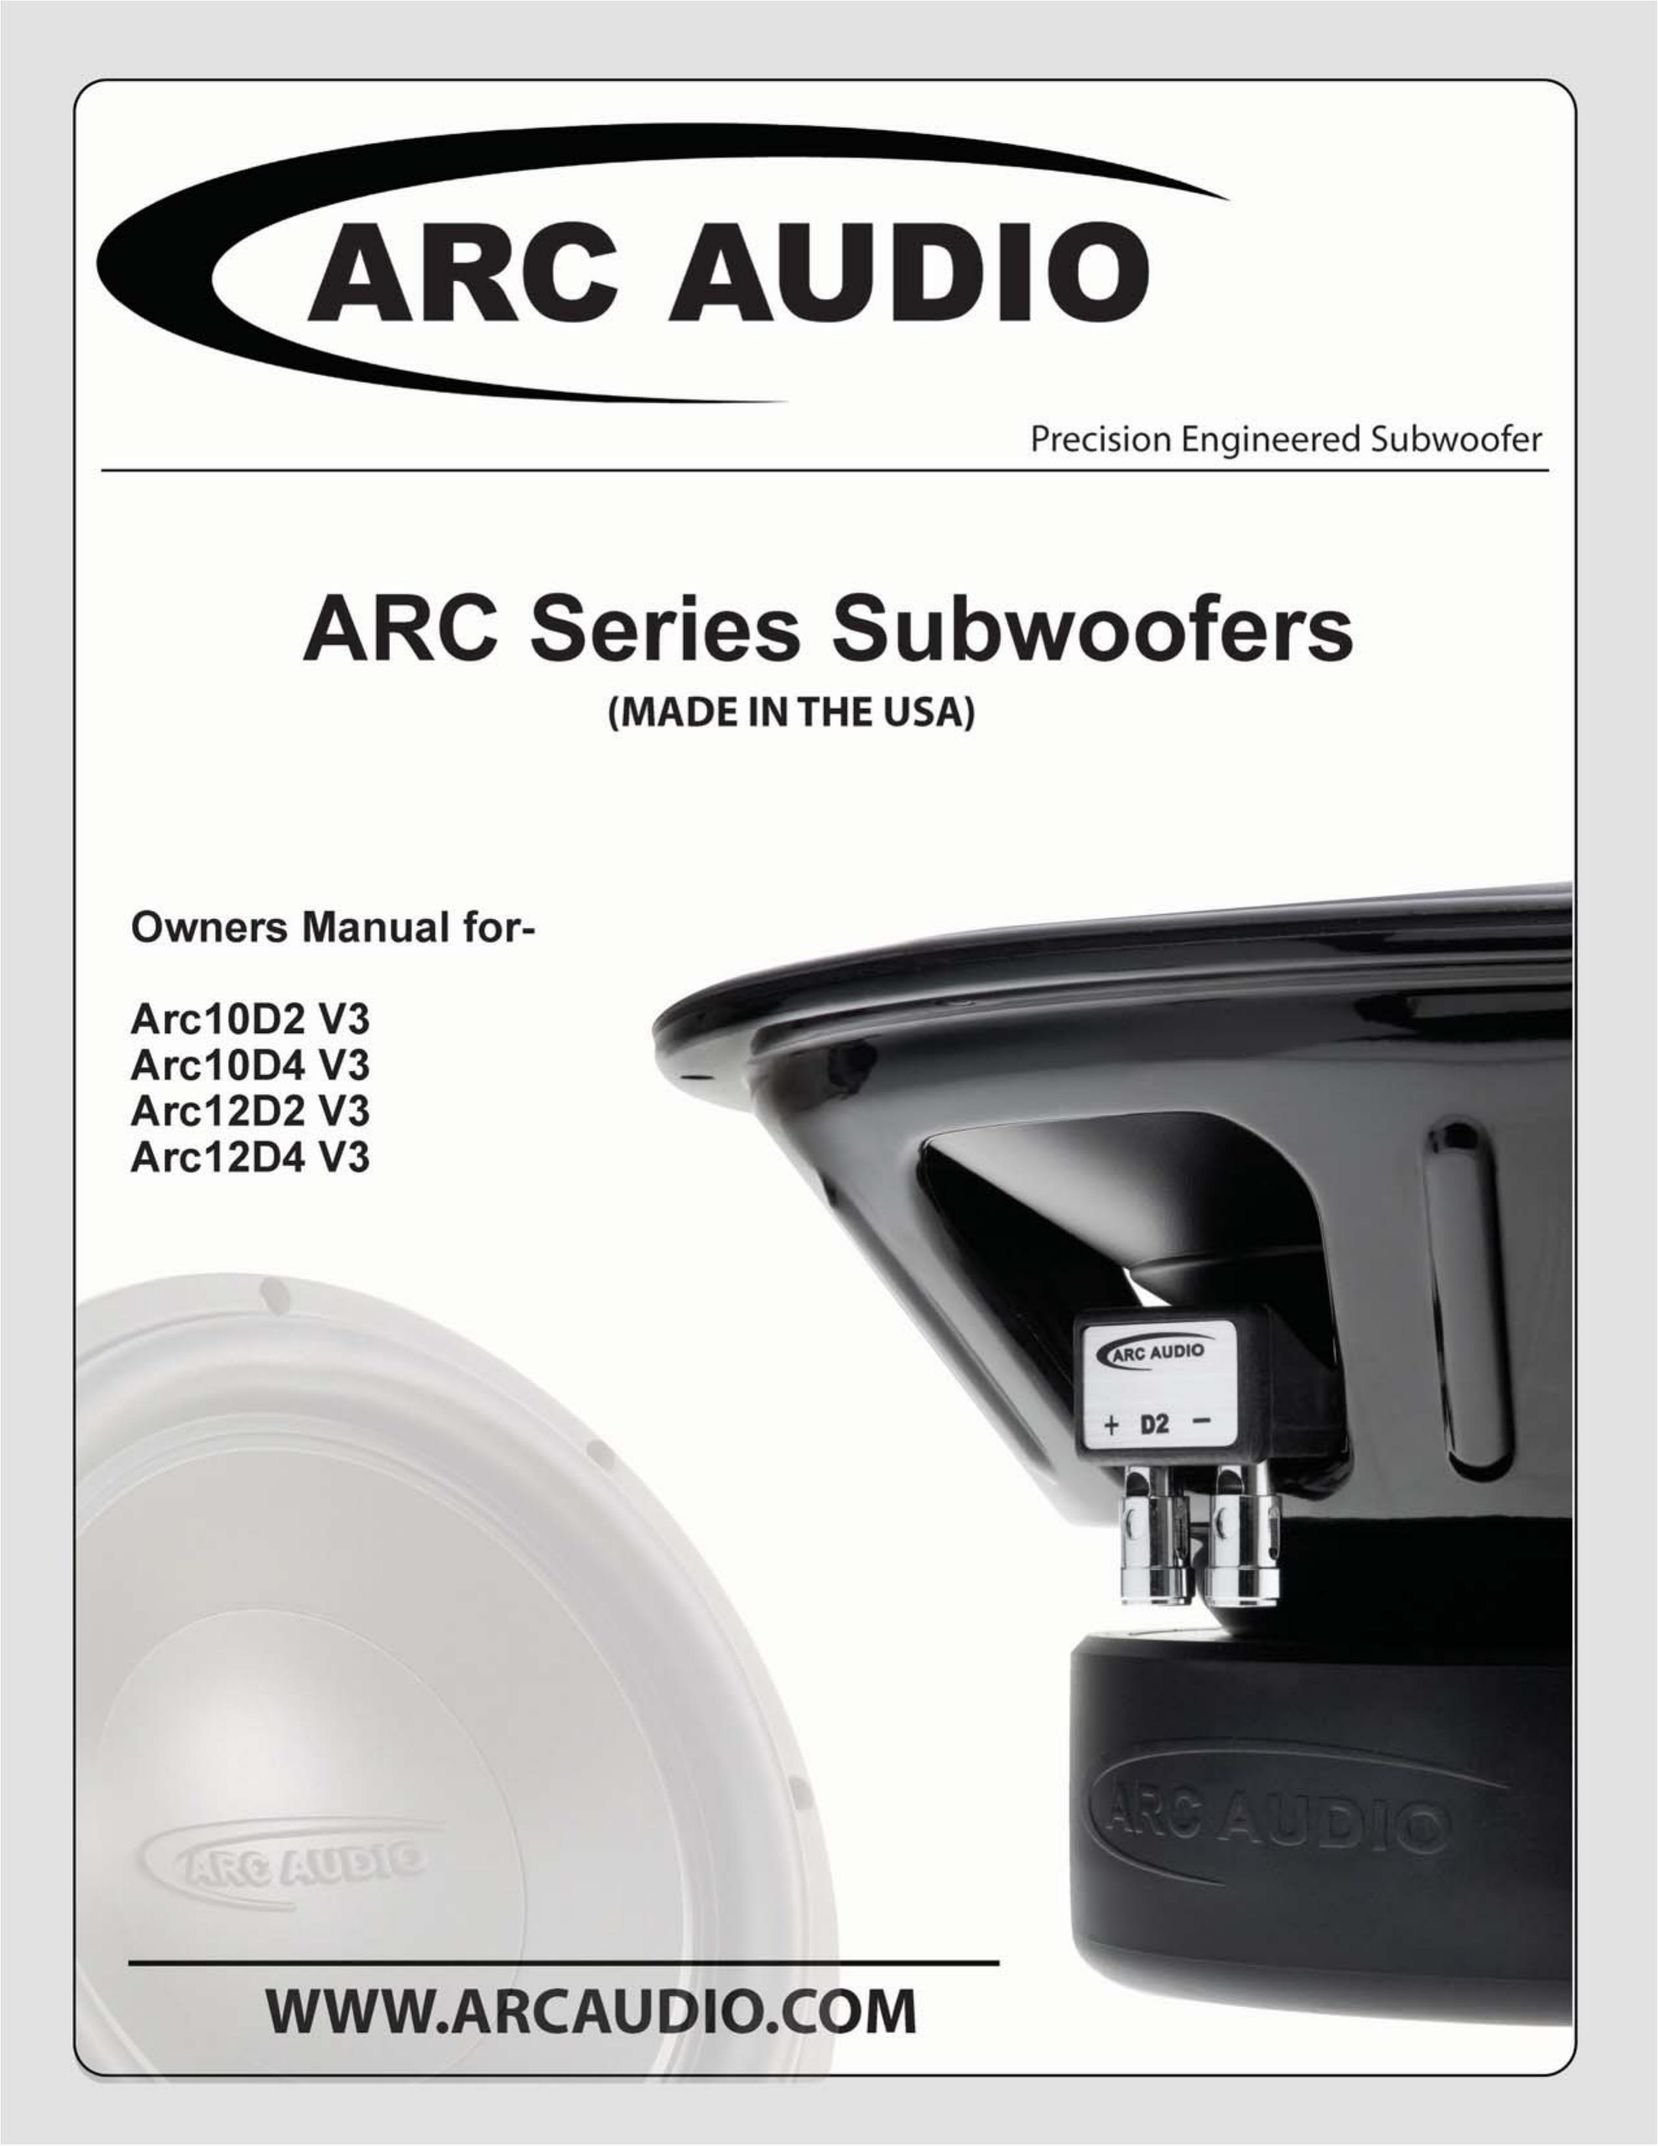 ARC Audio ARC12D4 V3 Speaker User Manual